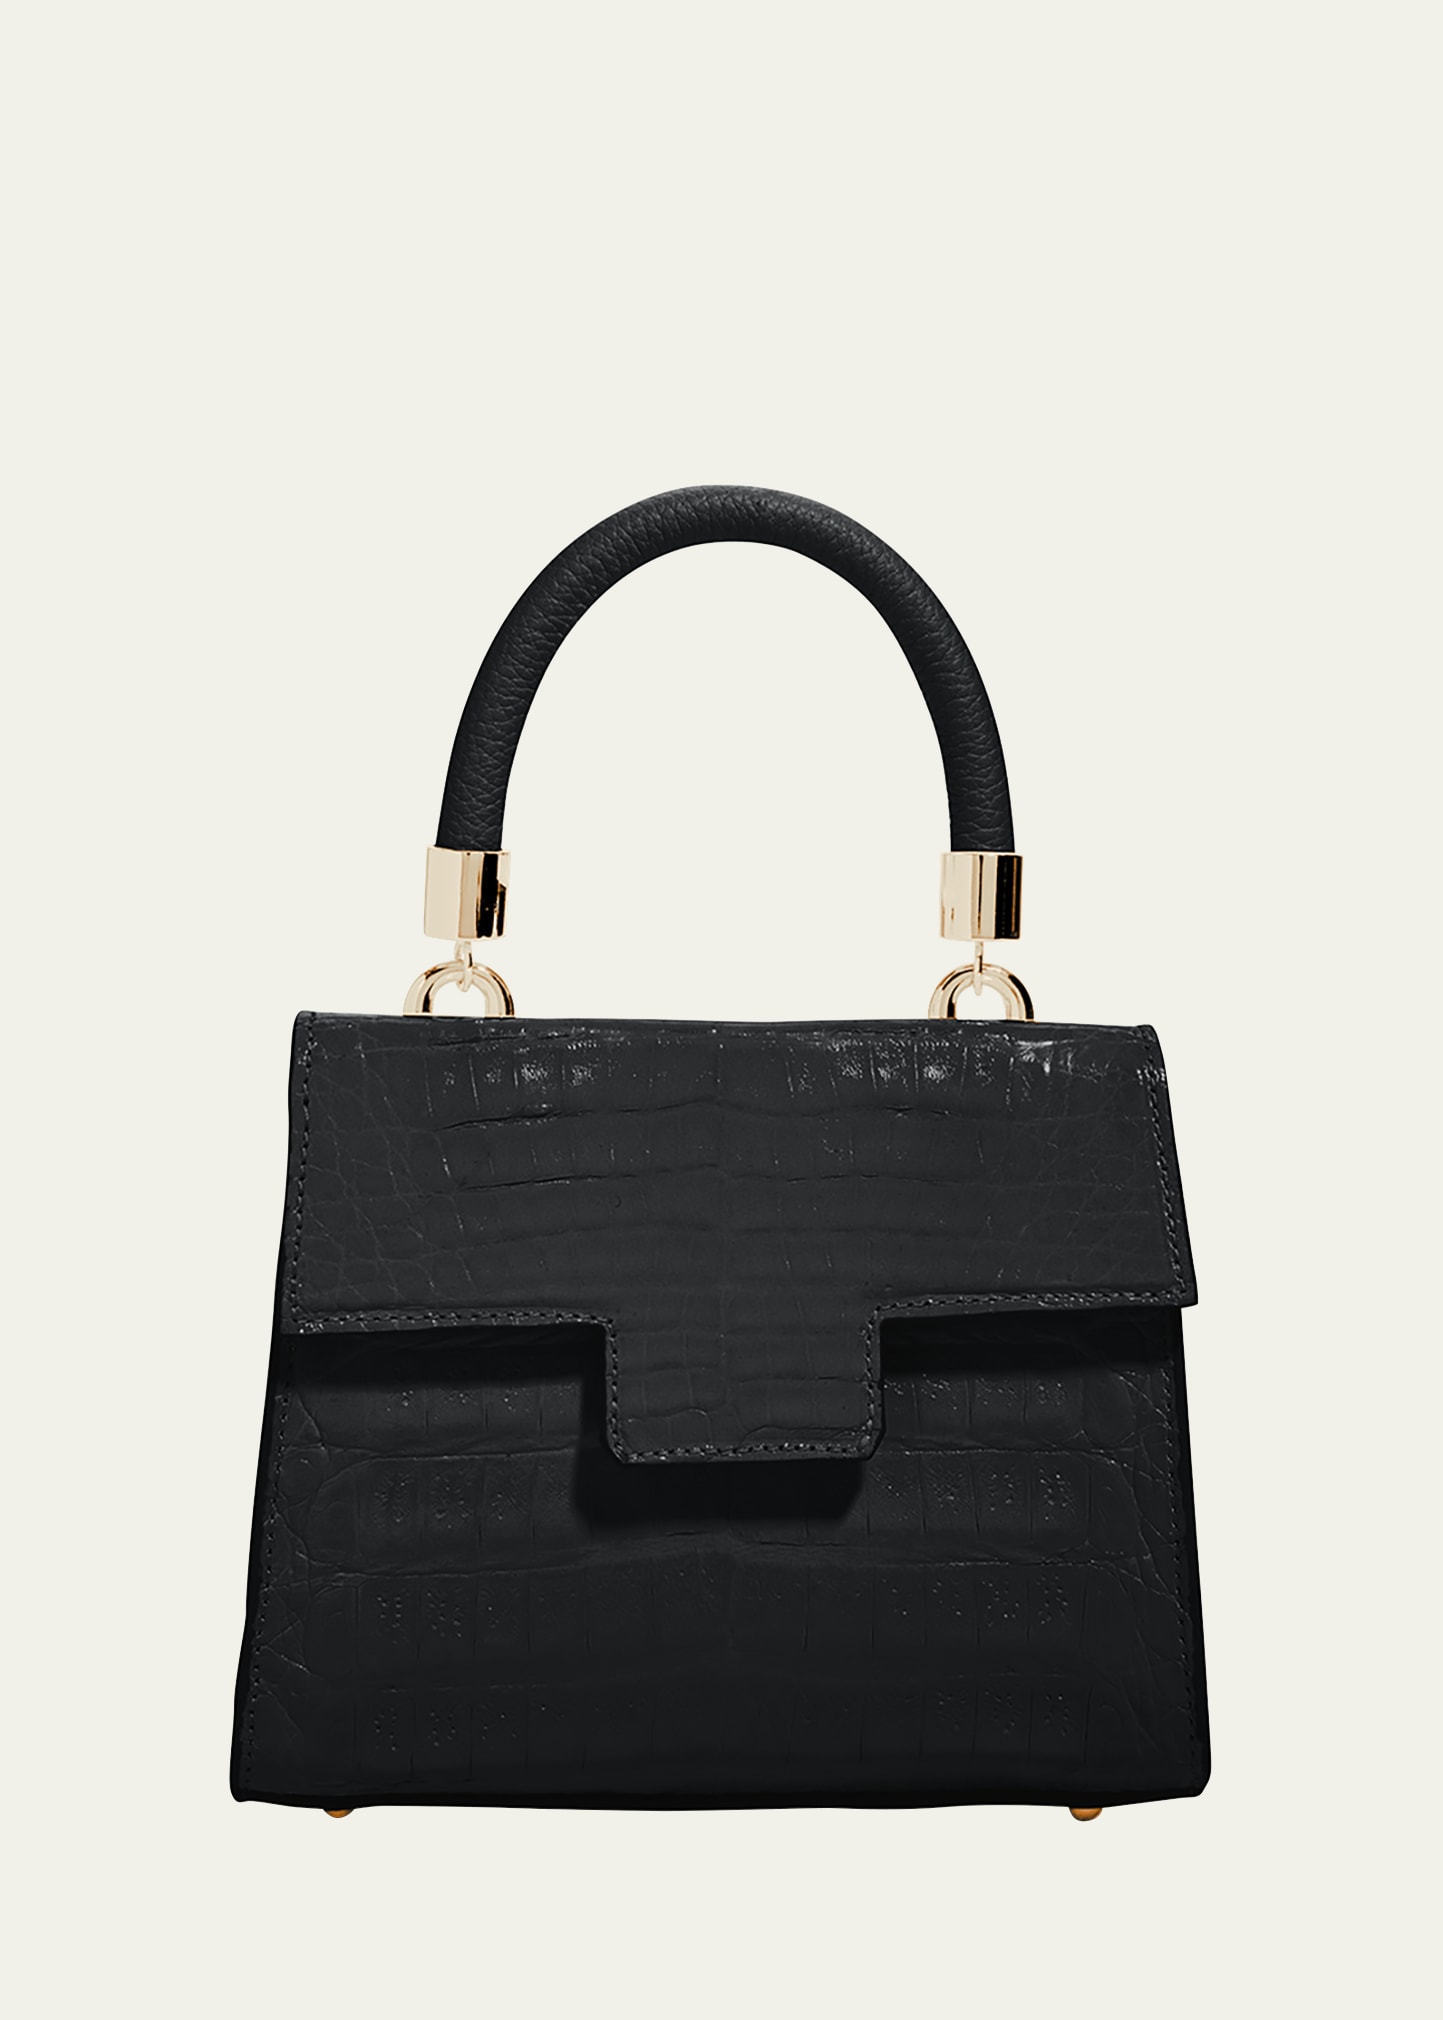 Maria Oliver Michelle Crocodile Top-handle Bag In Black Shiny